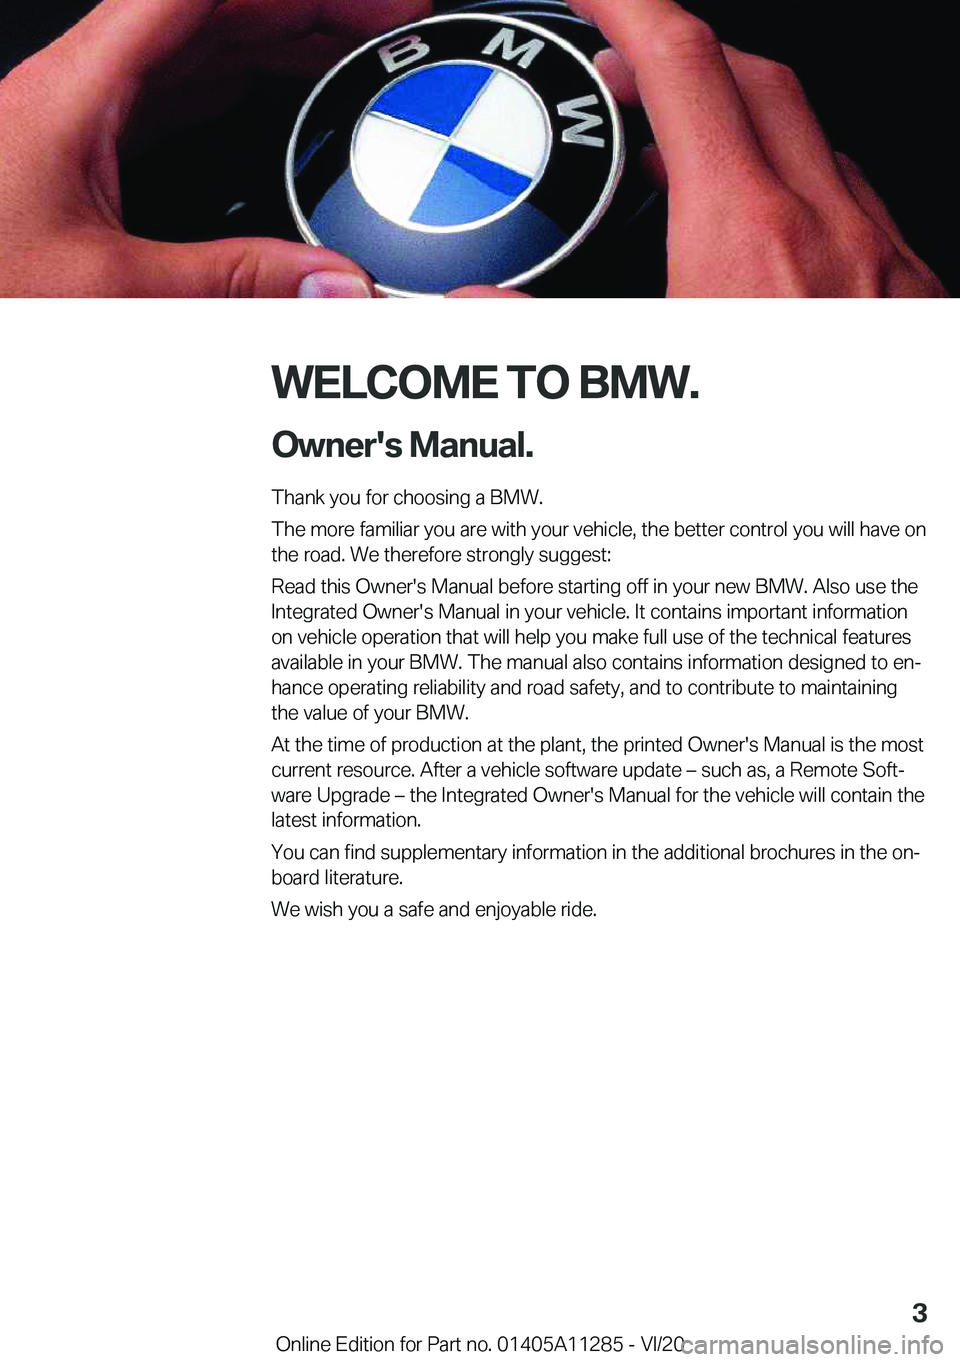 BMW 4 SERIES COUPE 2021  Owners Manual �W�E�L�C�O�M�E��T�O��B�M�W�.�O�w�n�e�r�'�s��M�a�n�u�a�l�.
�T�h�a�n�k��y�o�u��f�o�r��c�h�o�o�s�i�n�g��a��B�M�W�.
�T�h�e��m�o�r�e��f�a�m�i�l�i�a�r��y�o�u��a�r�e��w�i�t�h��y�o�u�r��v�e